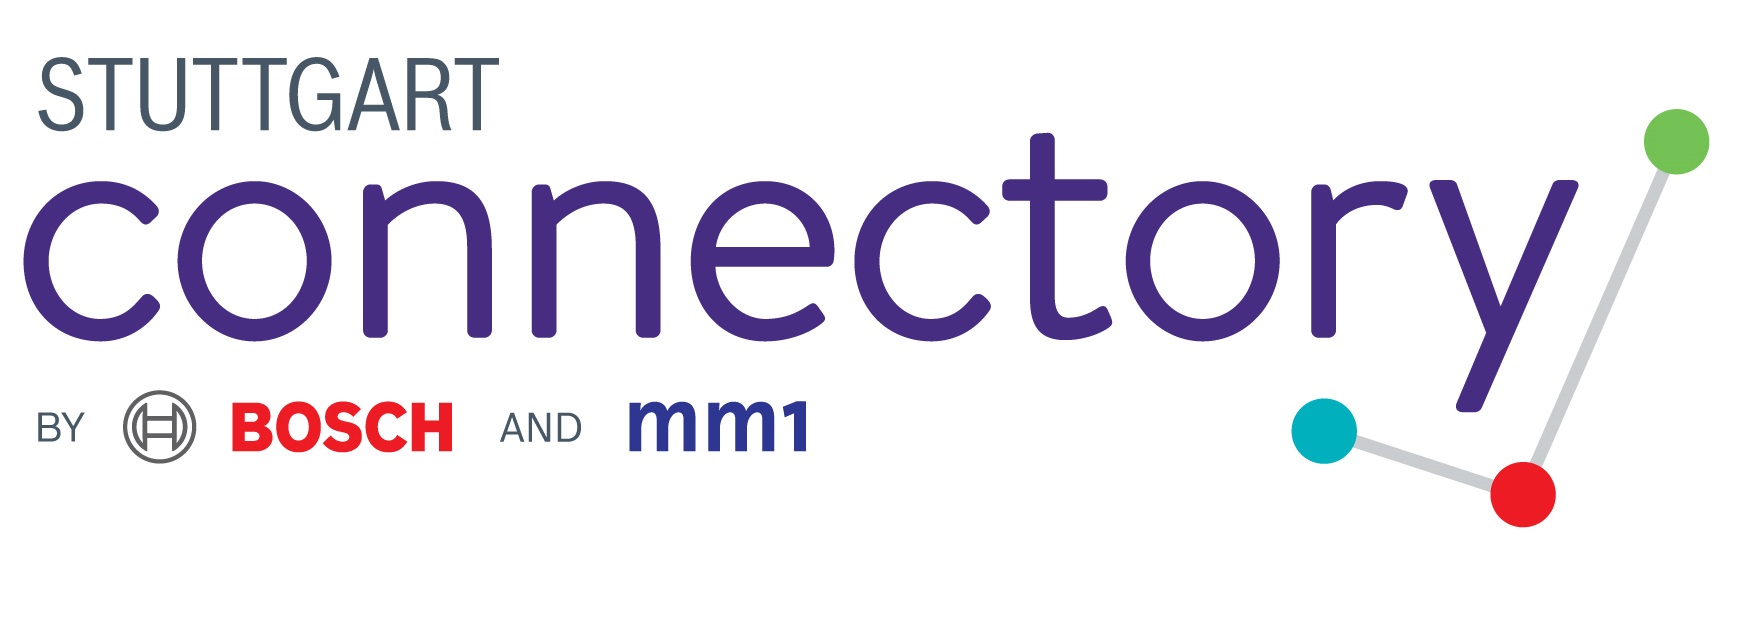 connectory Logo